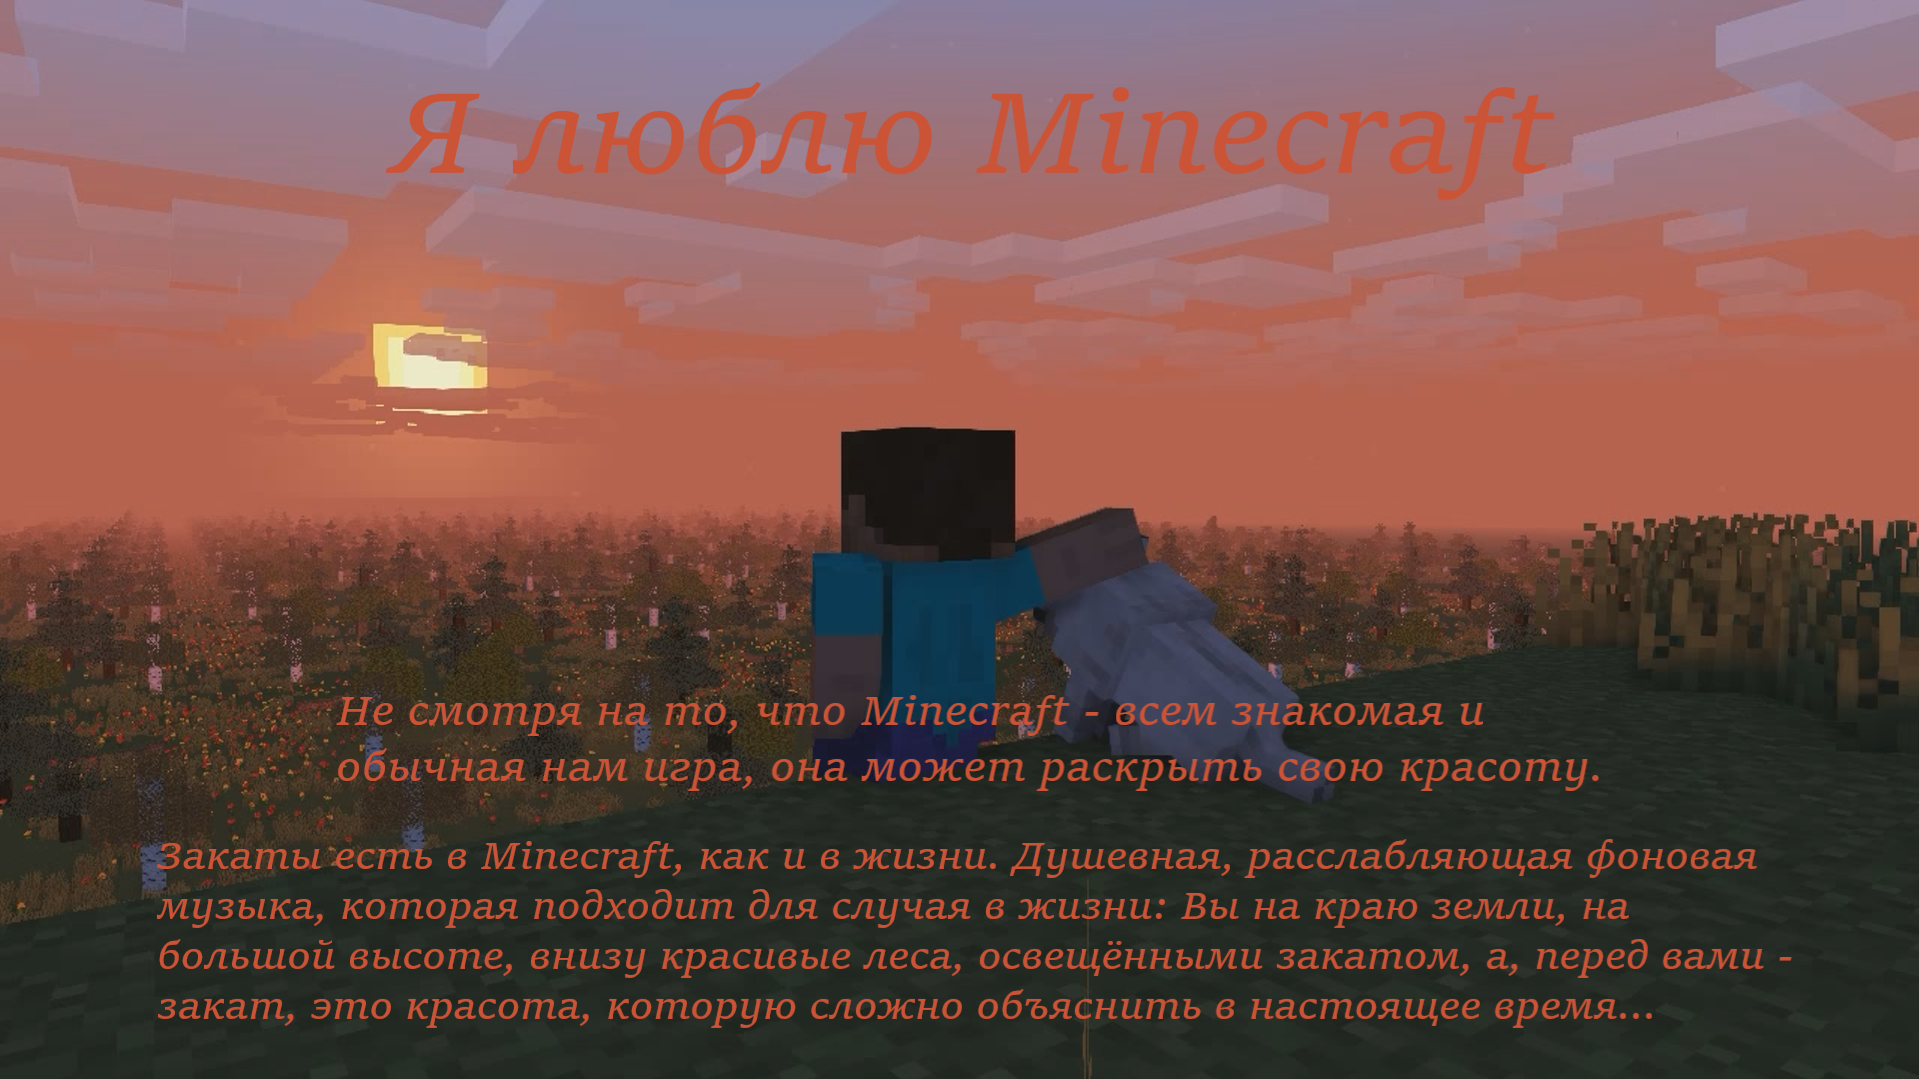 Фоновая музыка - "I love Minecraft".